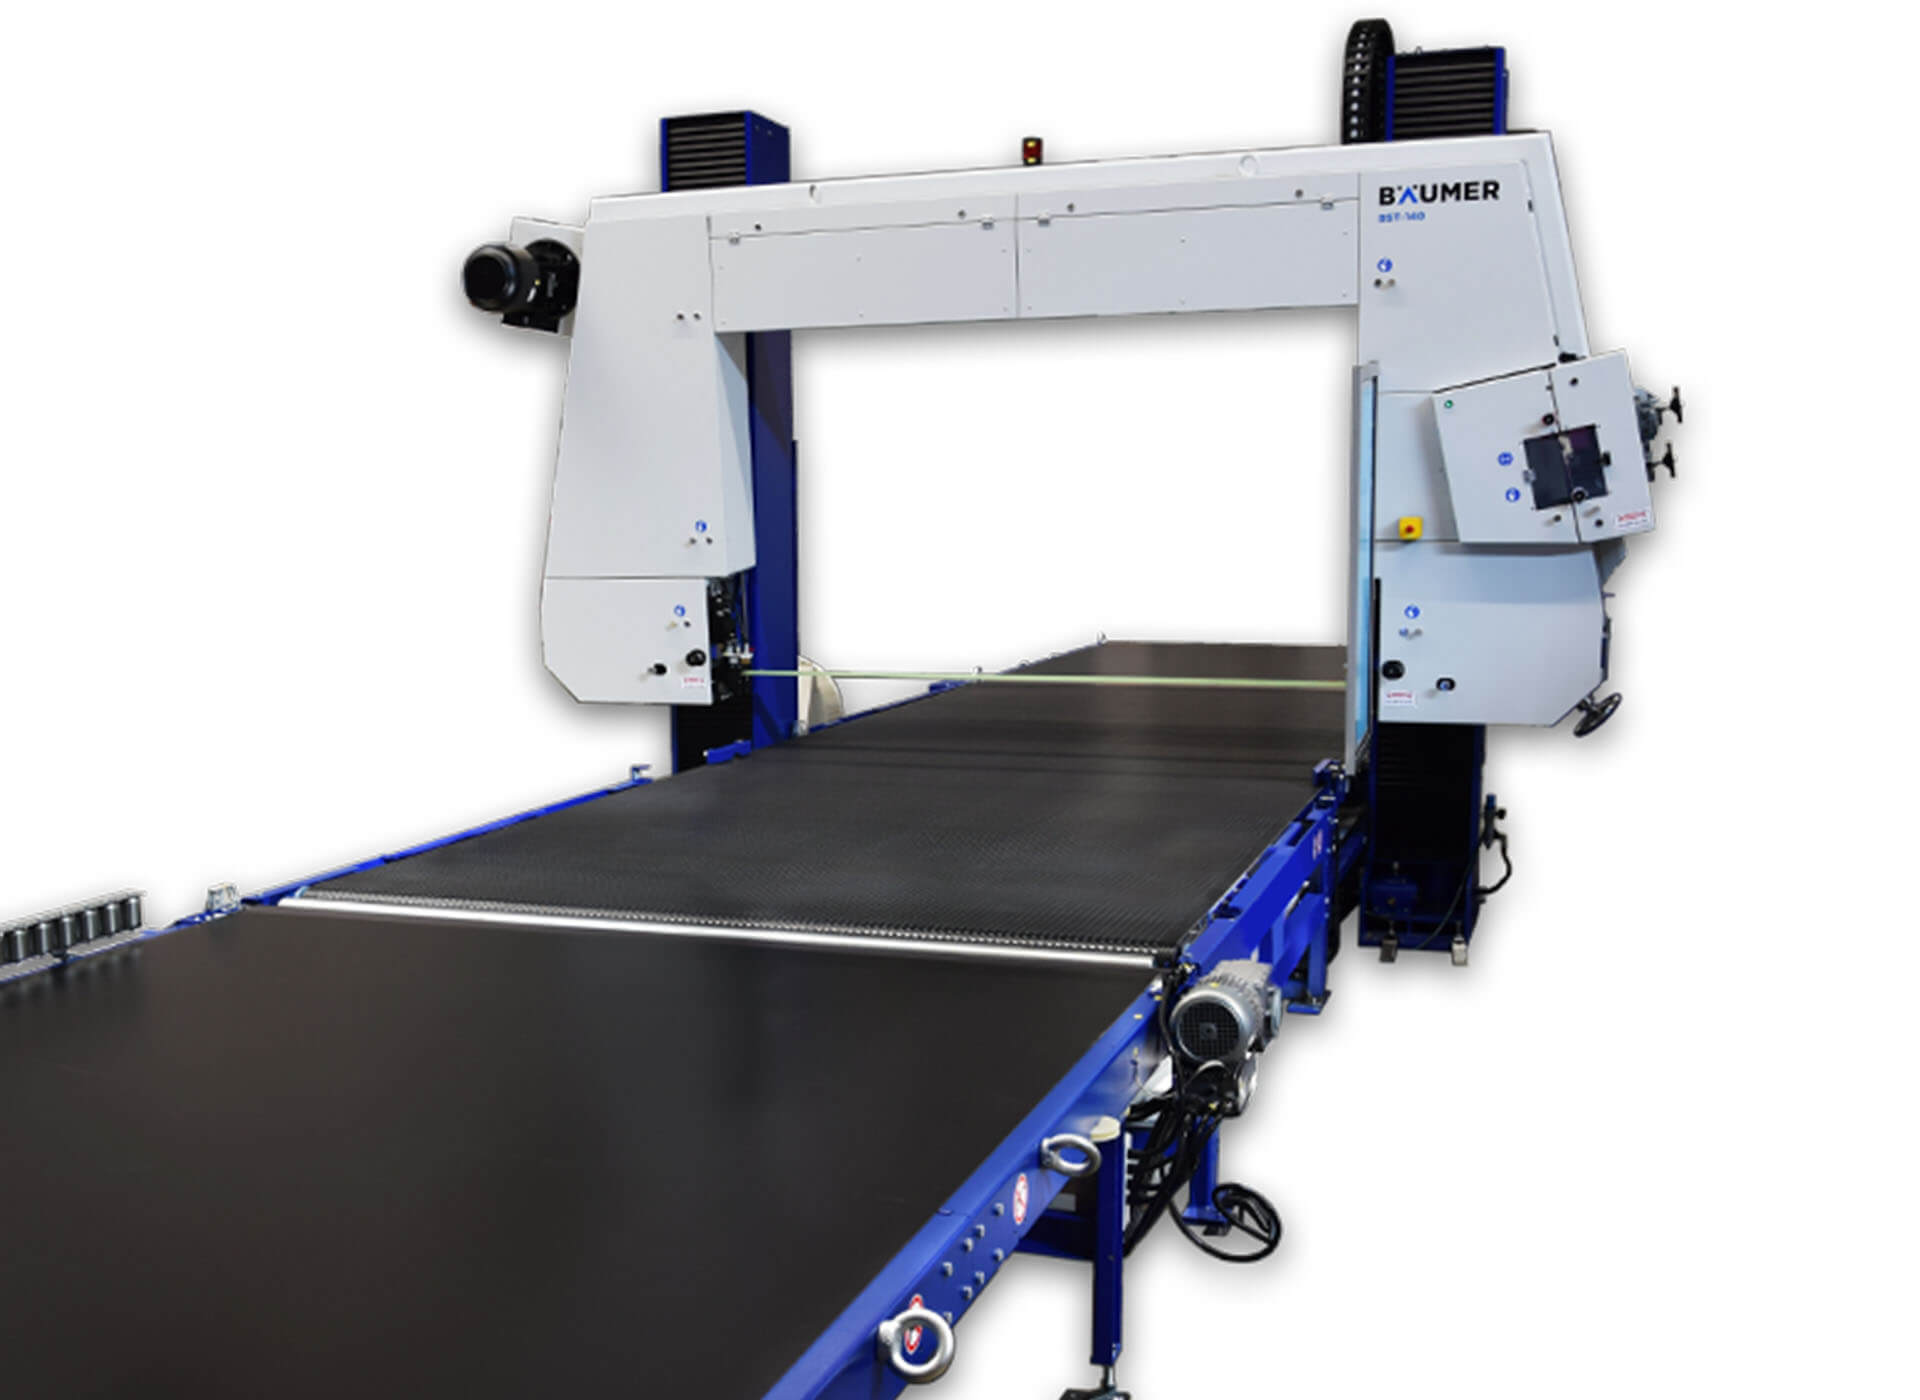 The horizontal foam cutting machine